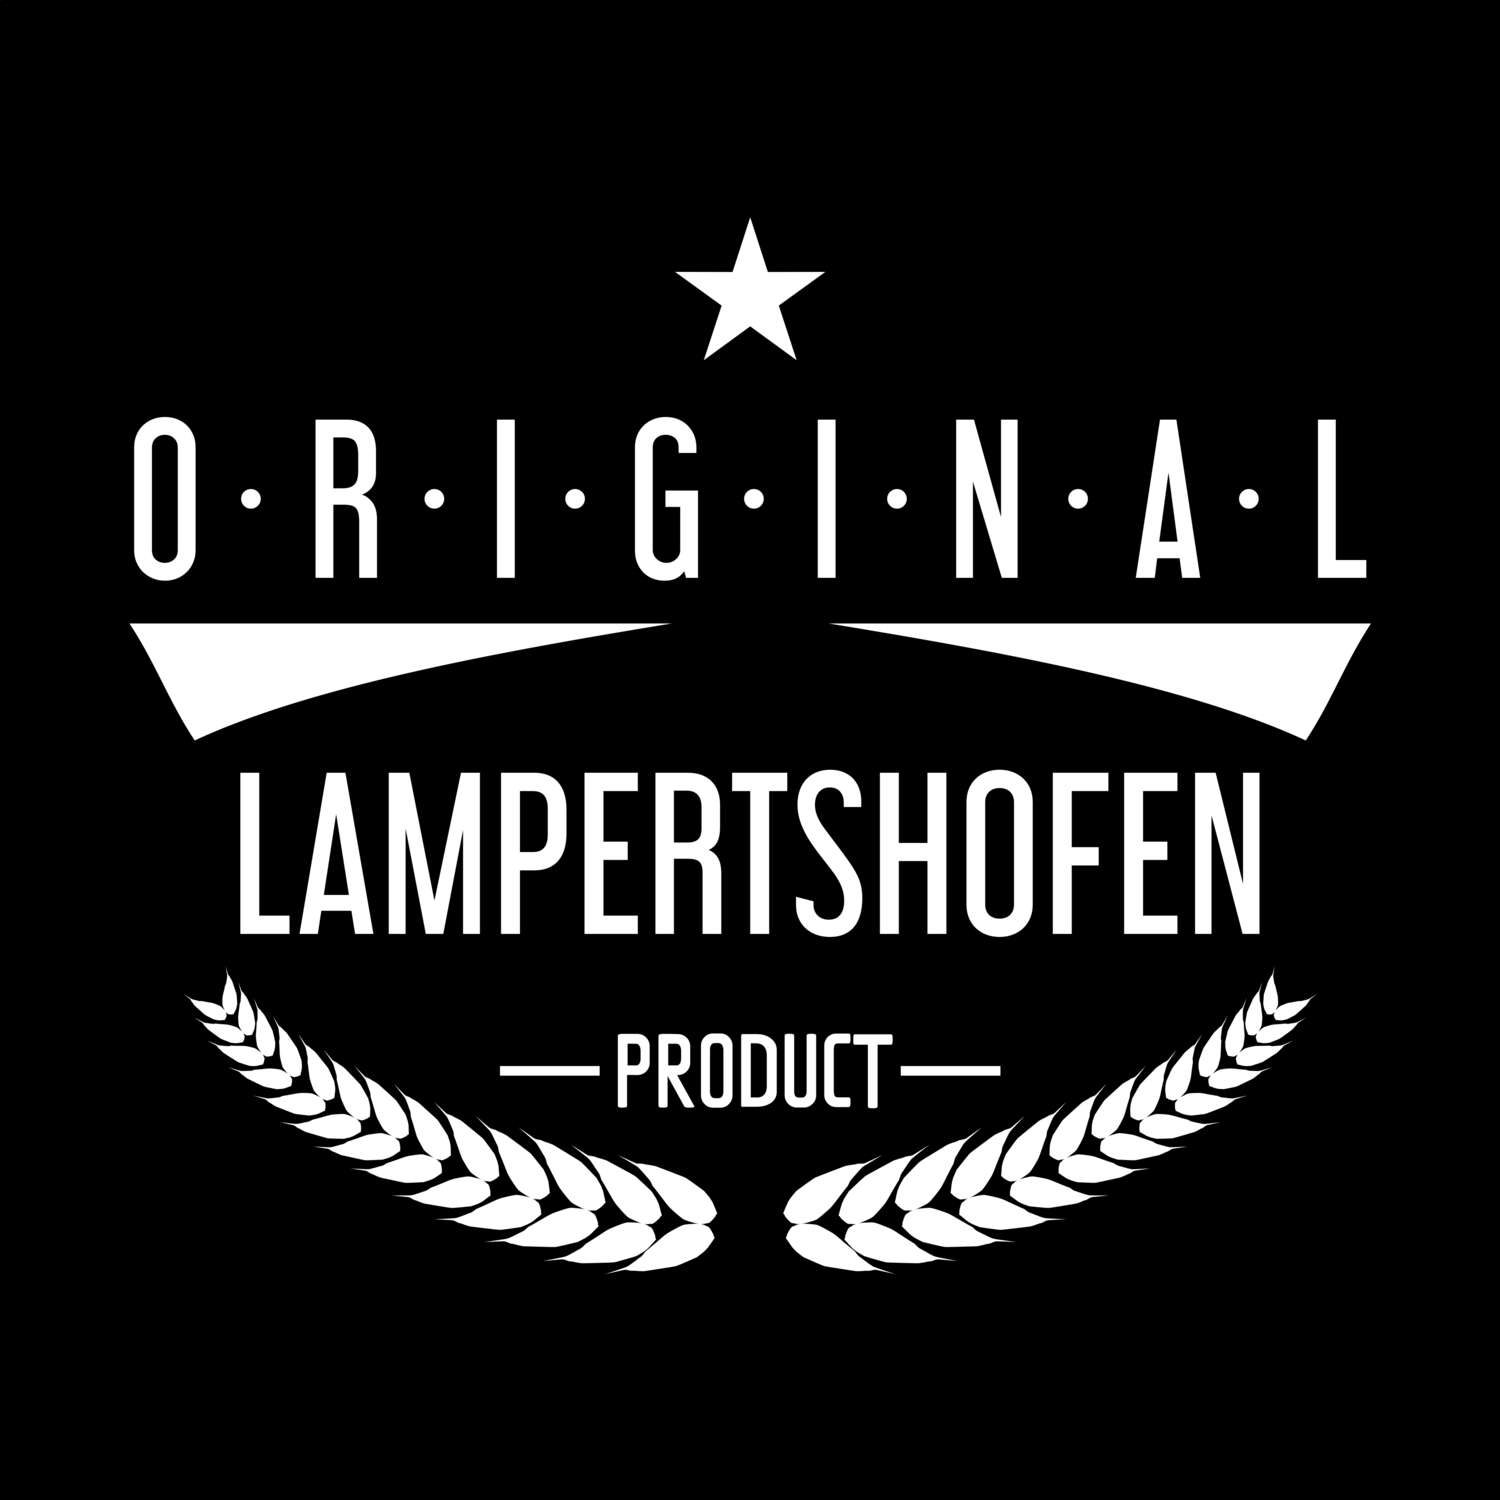 Lampertshofen T-Shirt »Original Product«